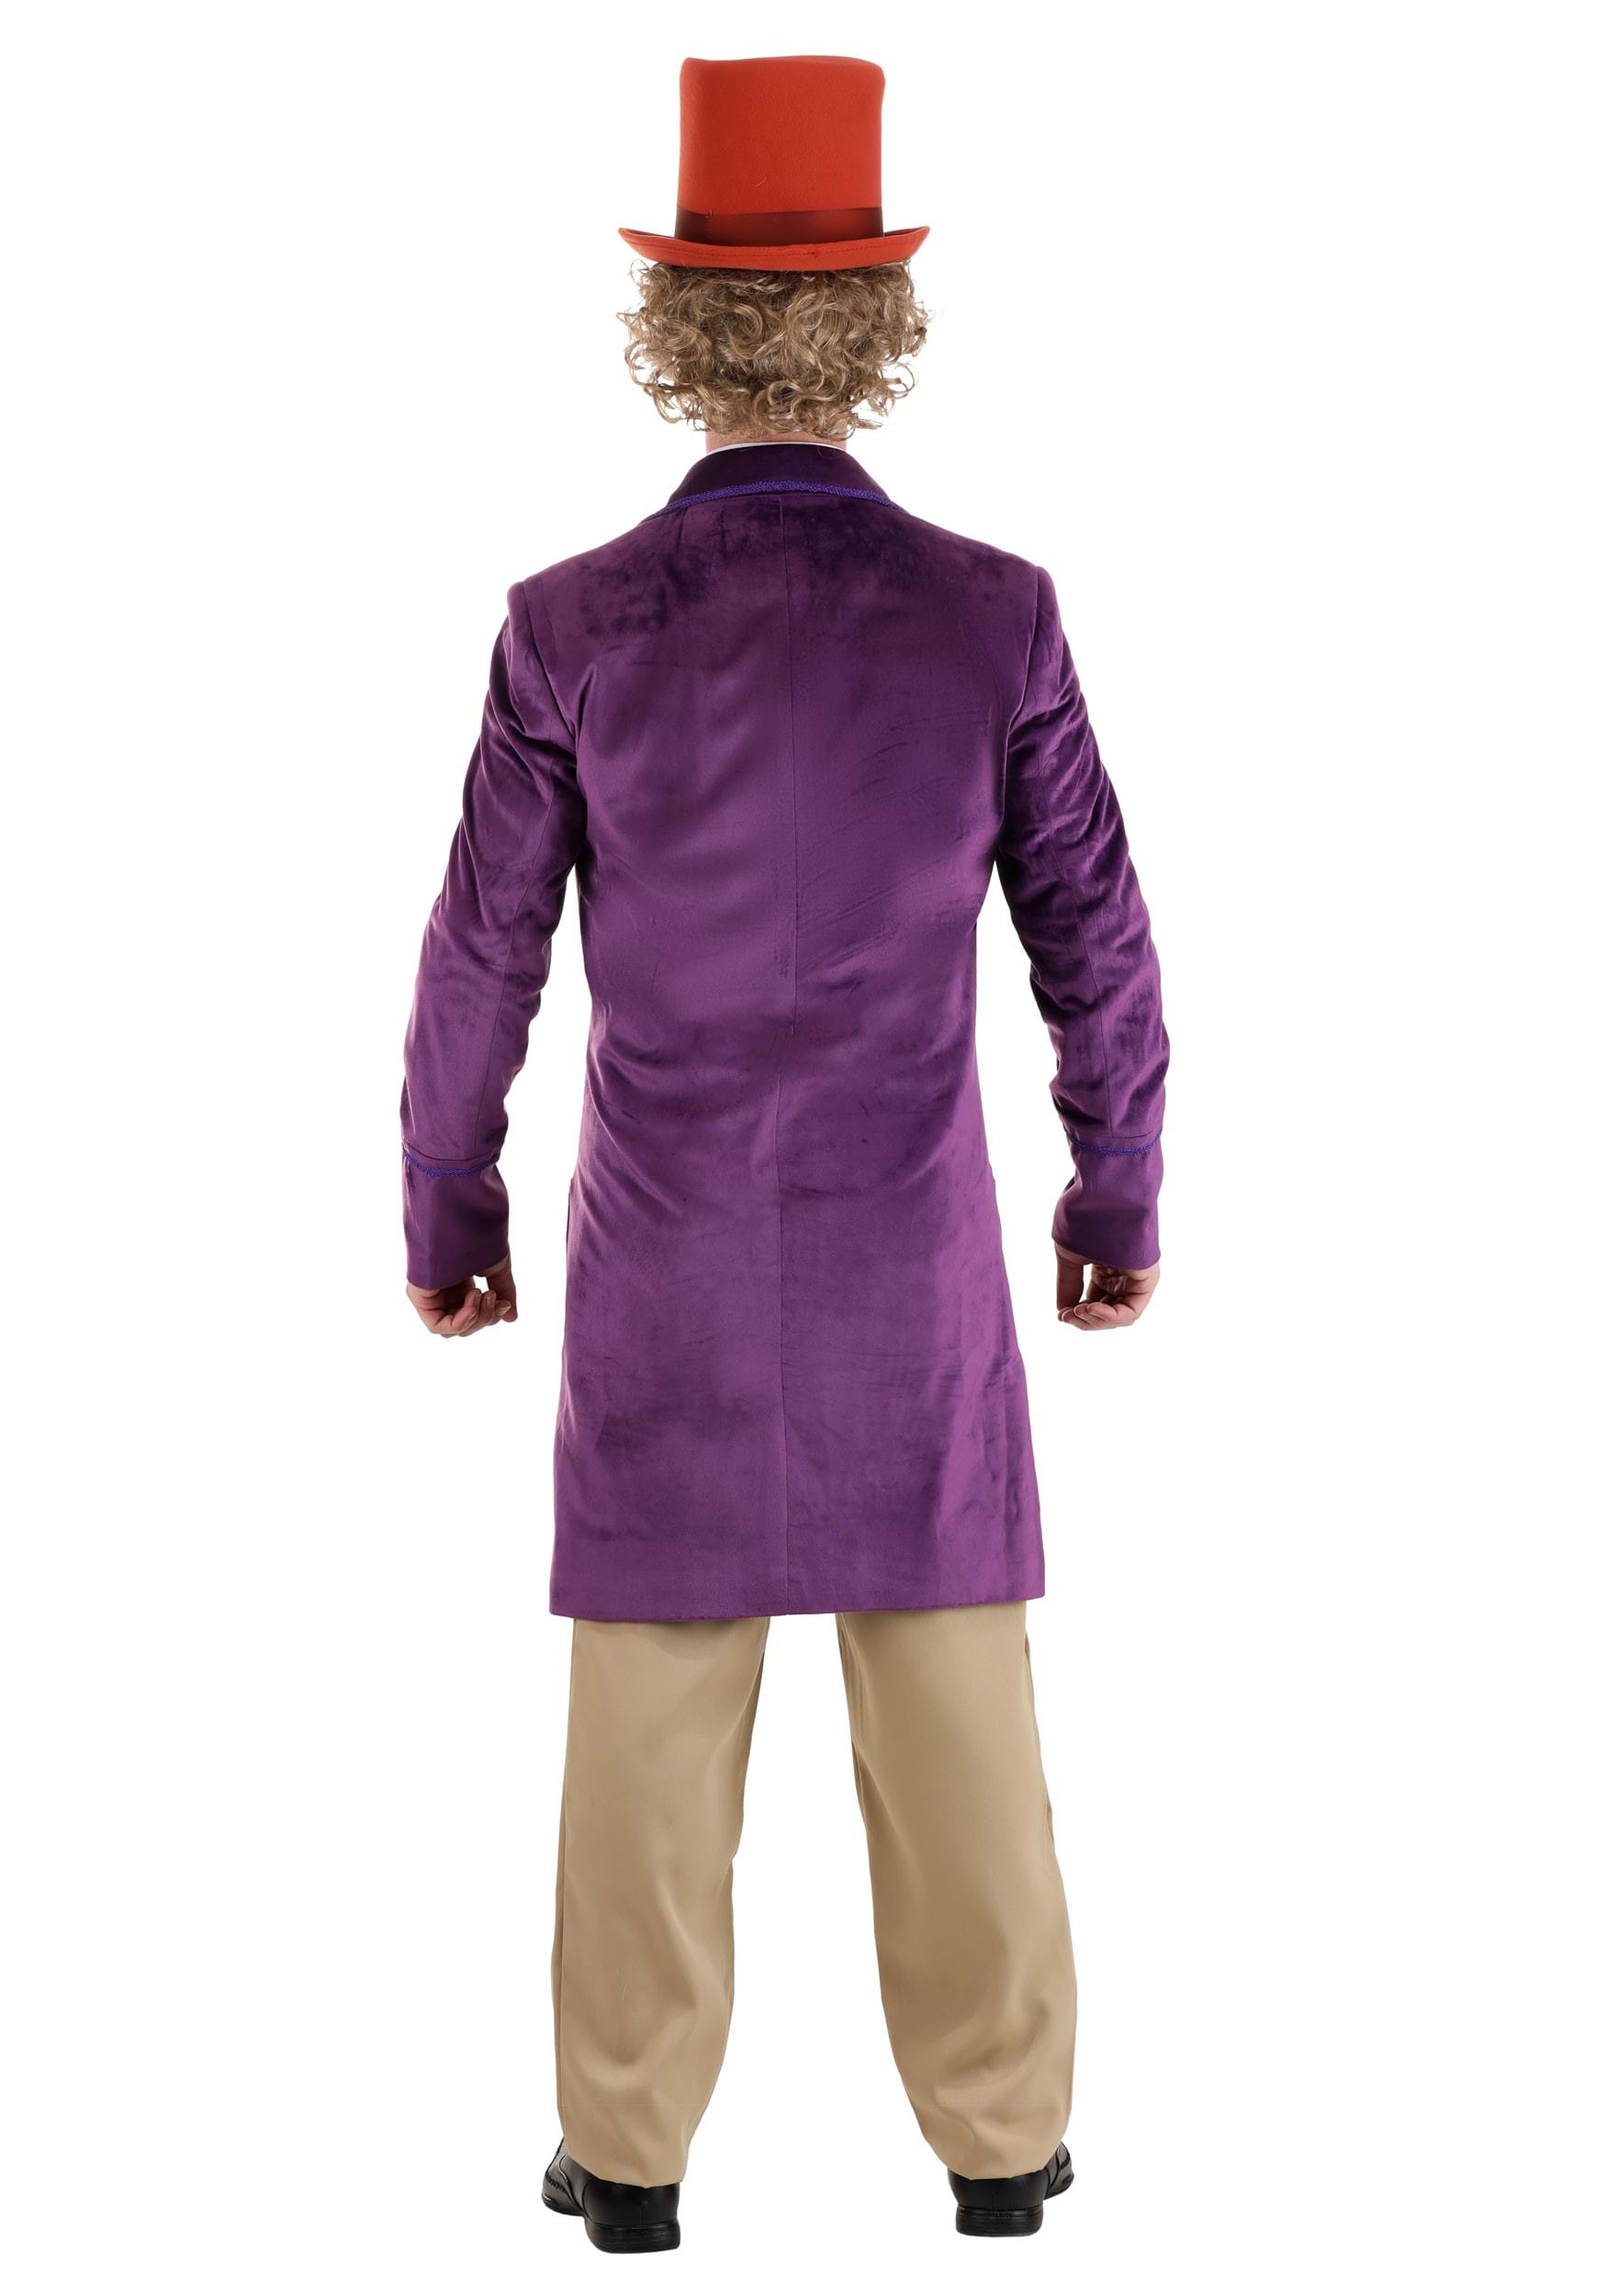 Authentic Willy Wonka Men's Fancy Dress Costume Jacket , Adult Fancy Dress Costumes